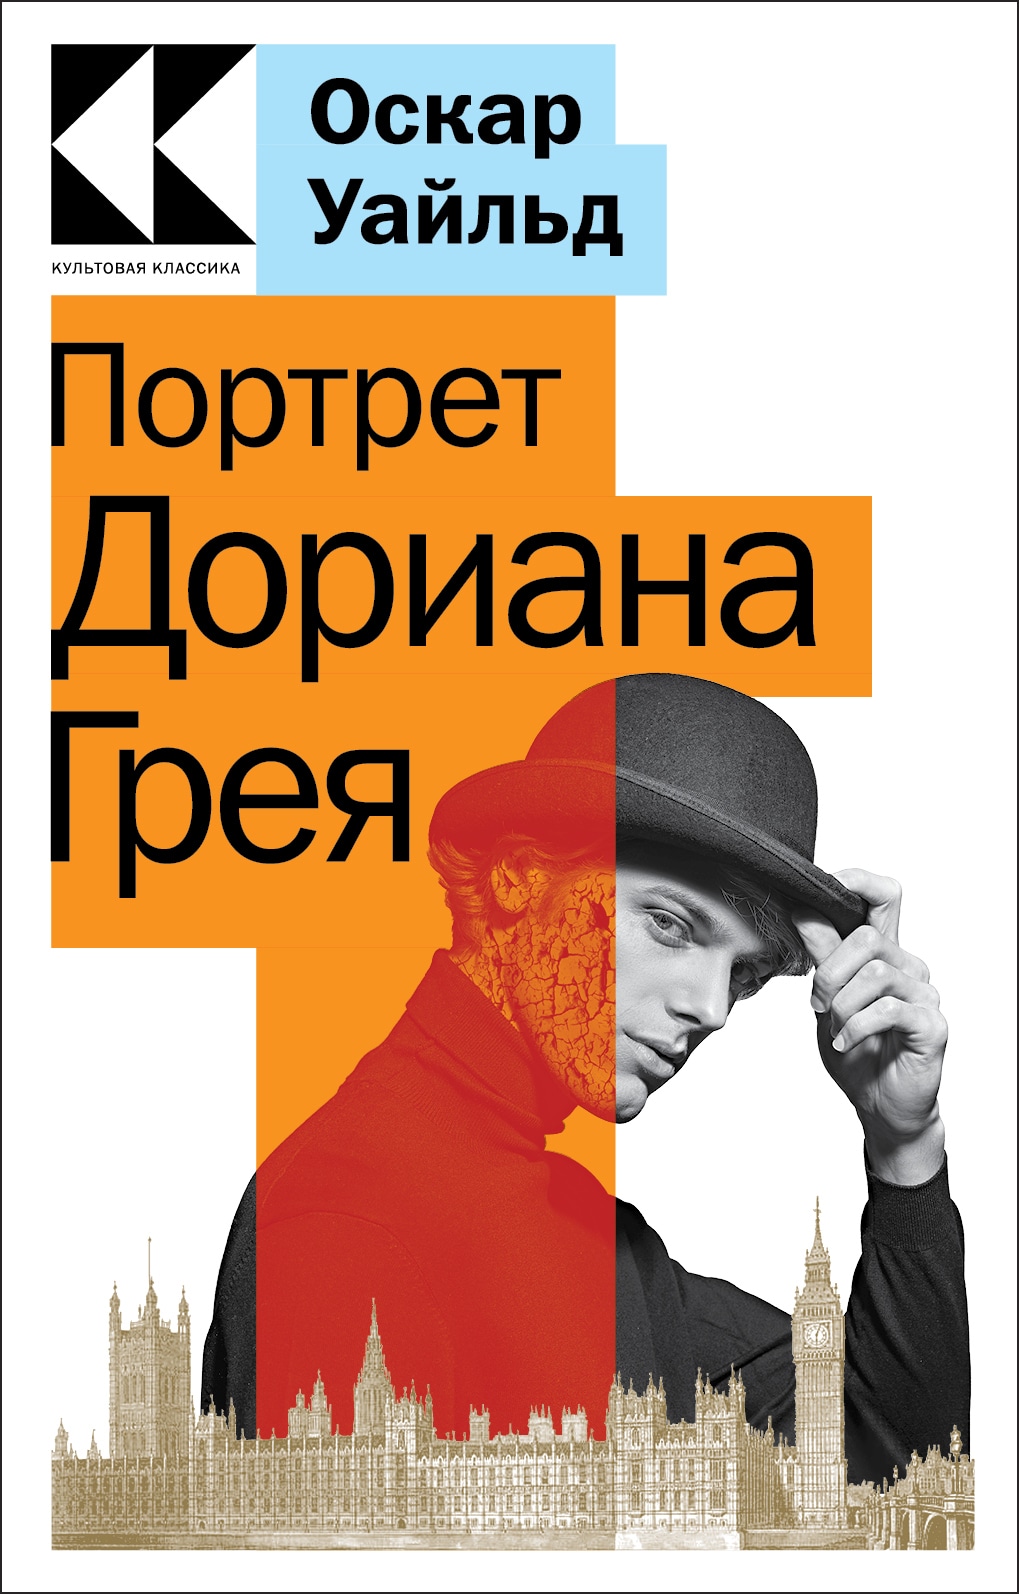 Book “Портрет Дориана Грея” by Оскар Уайльд — November 29, 2022